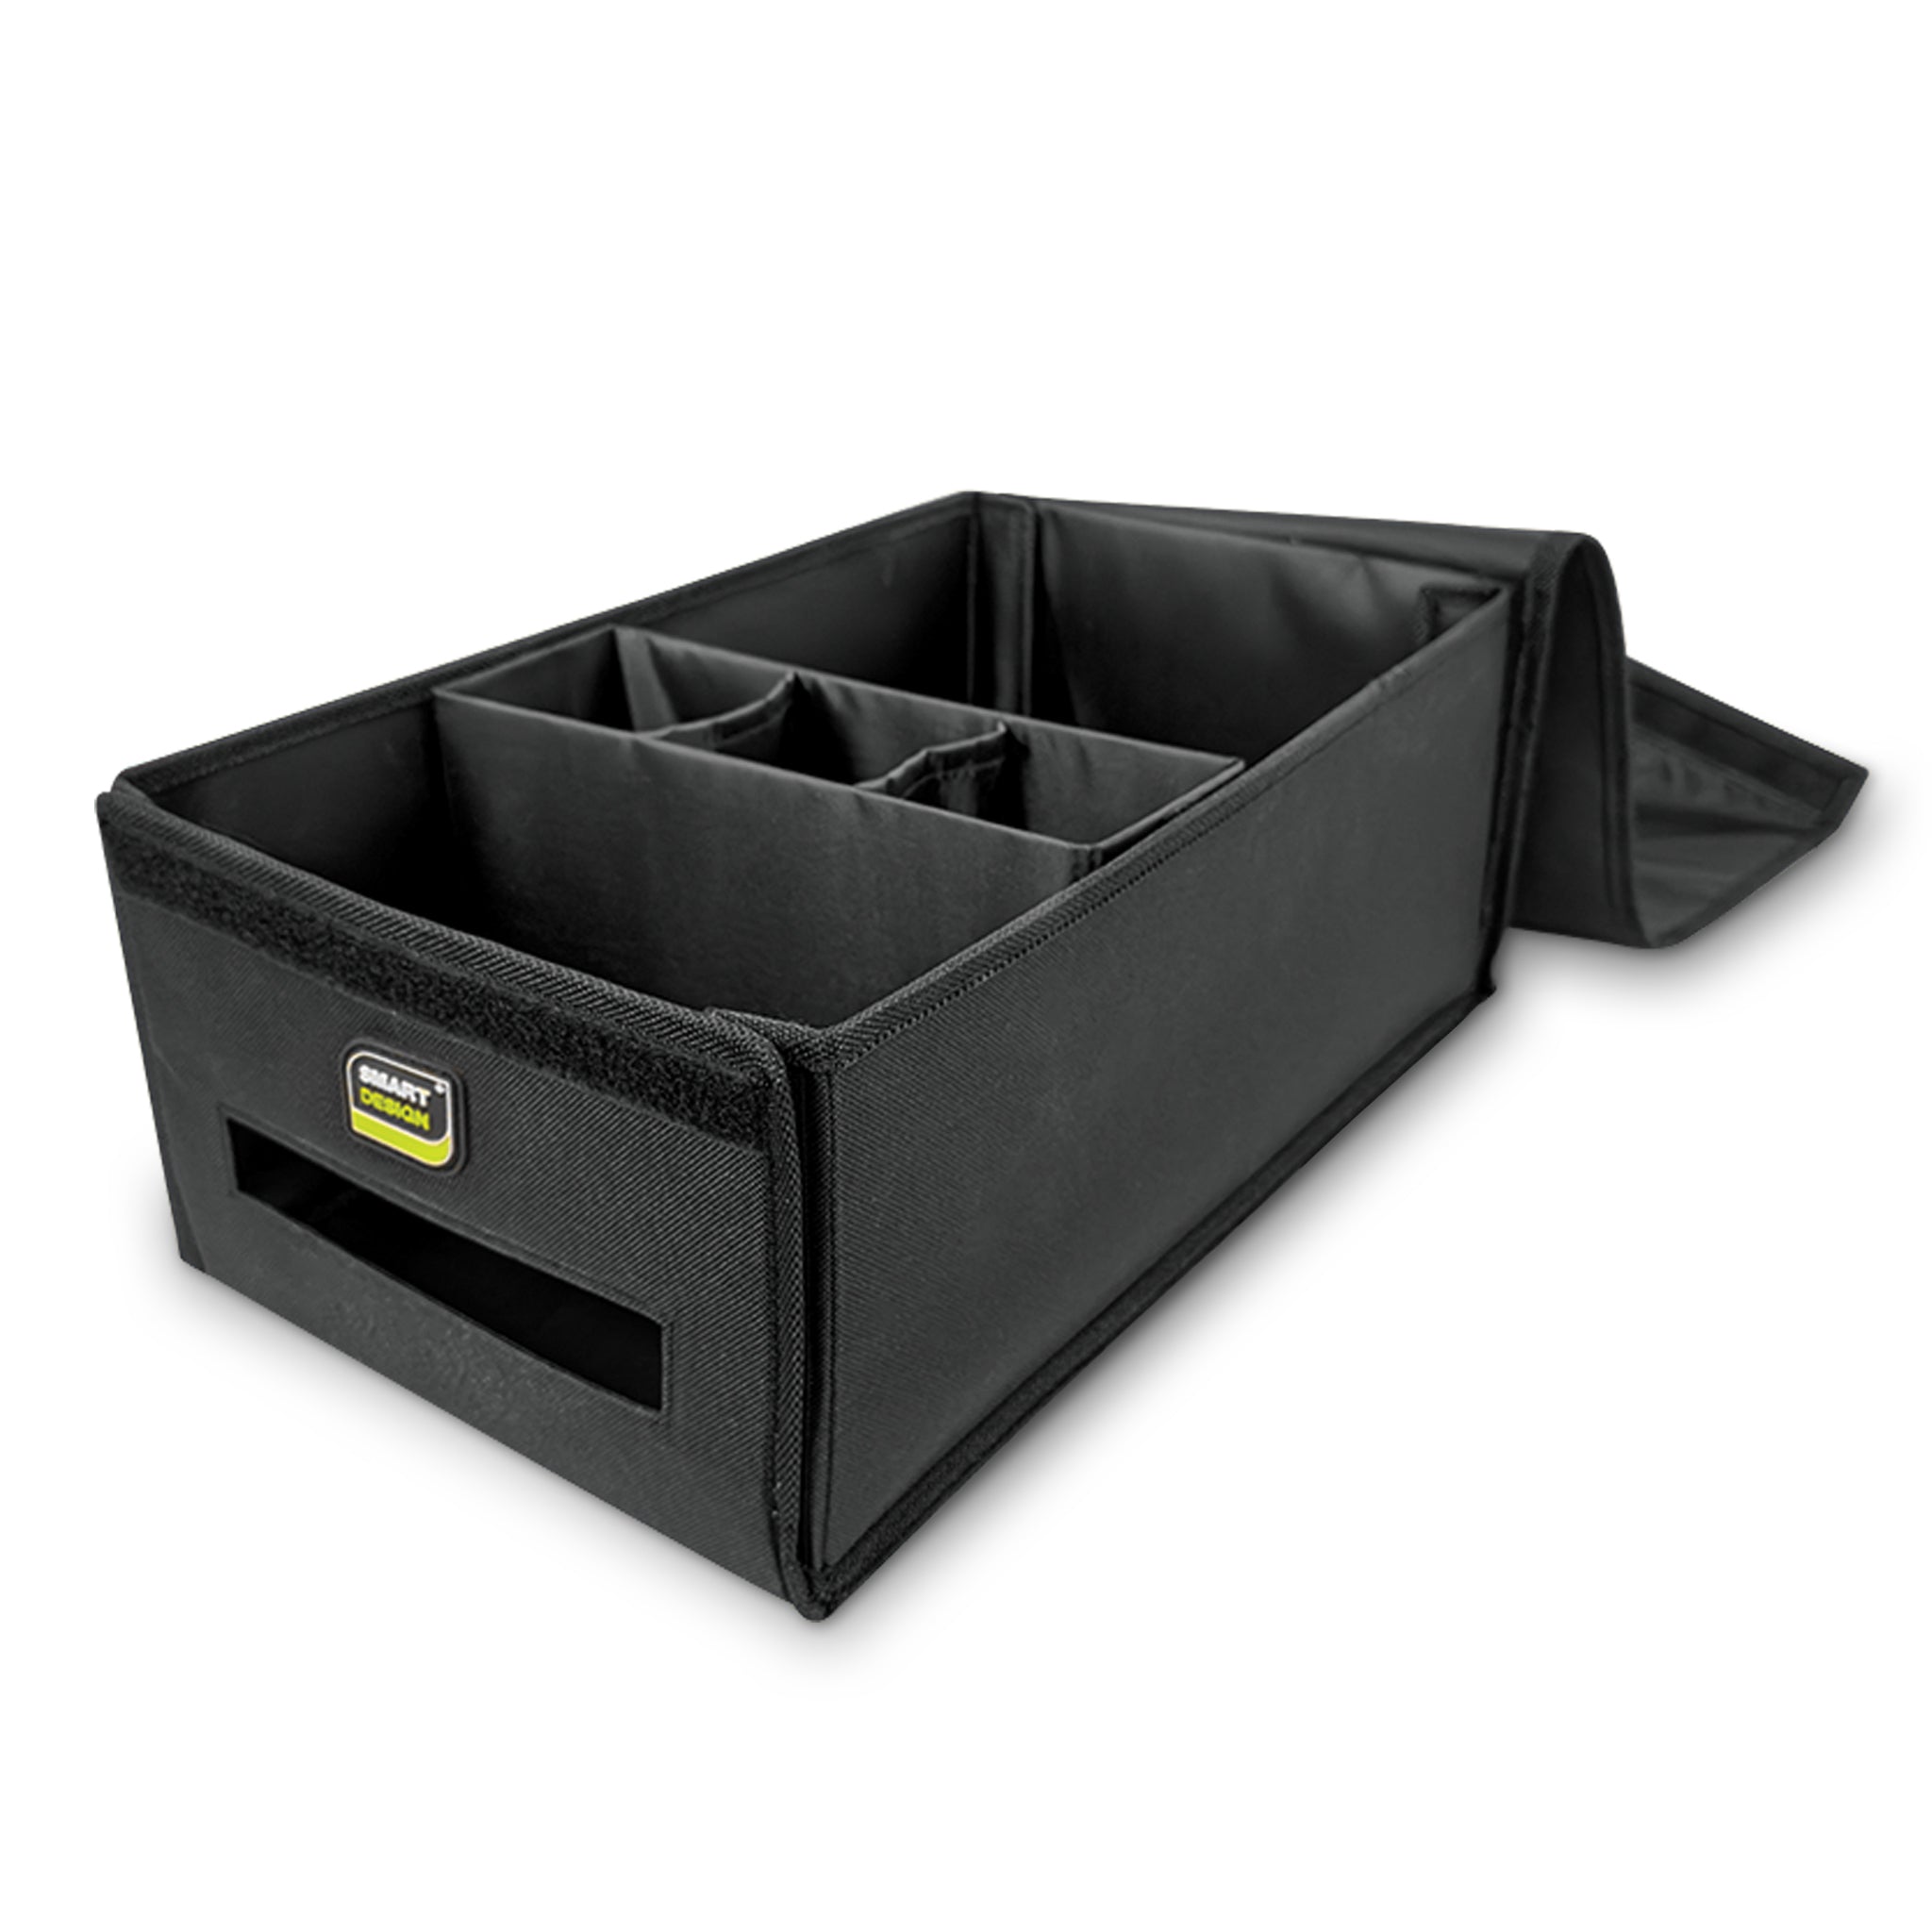 Car Organizer Console Box with Lid - Black - Smart Design® 1